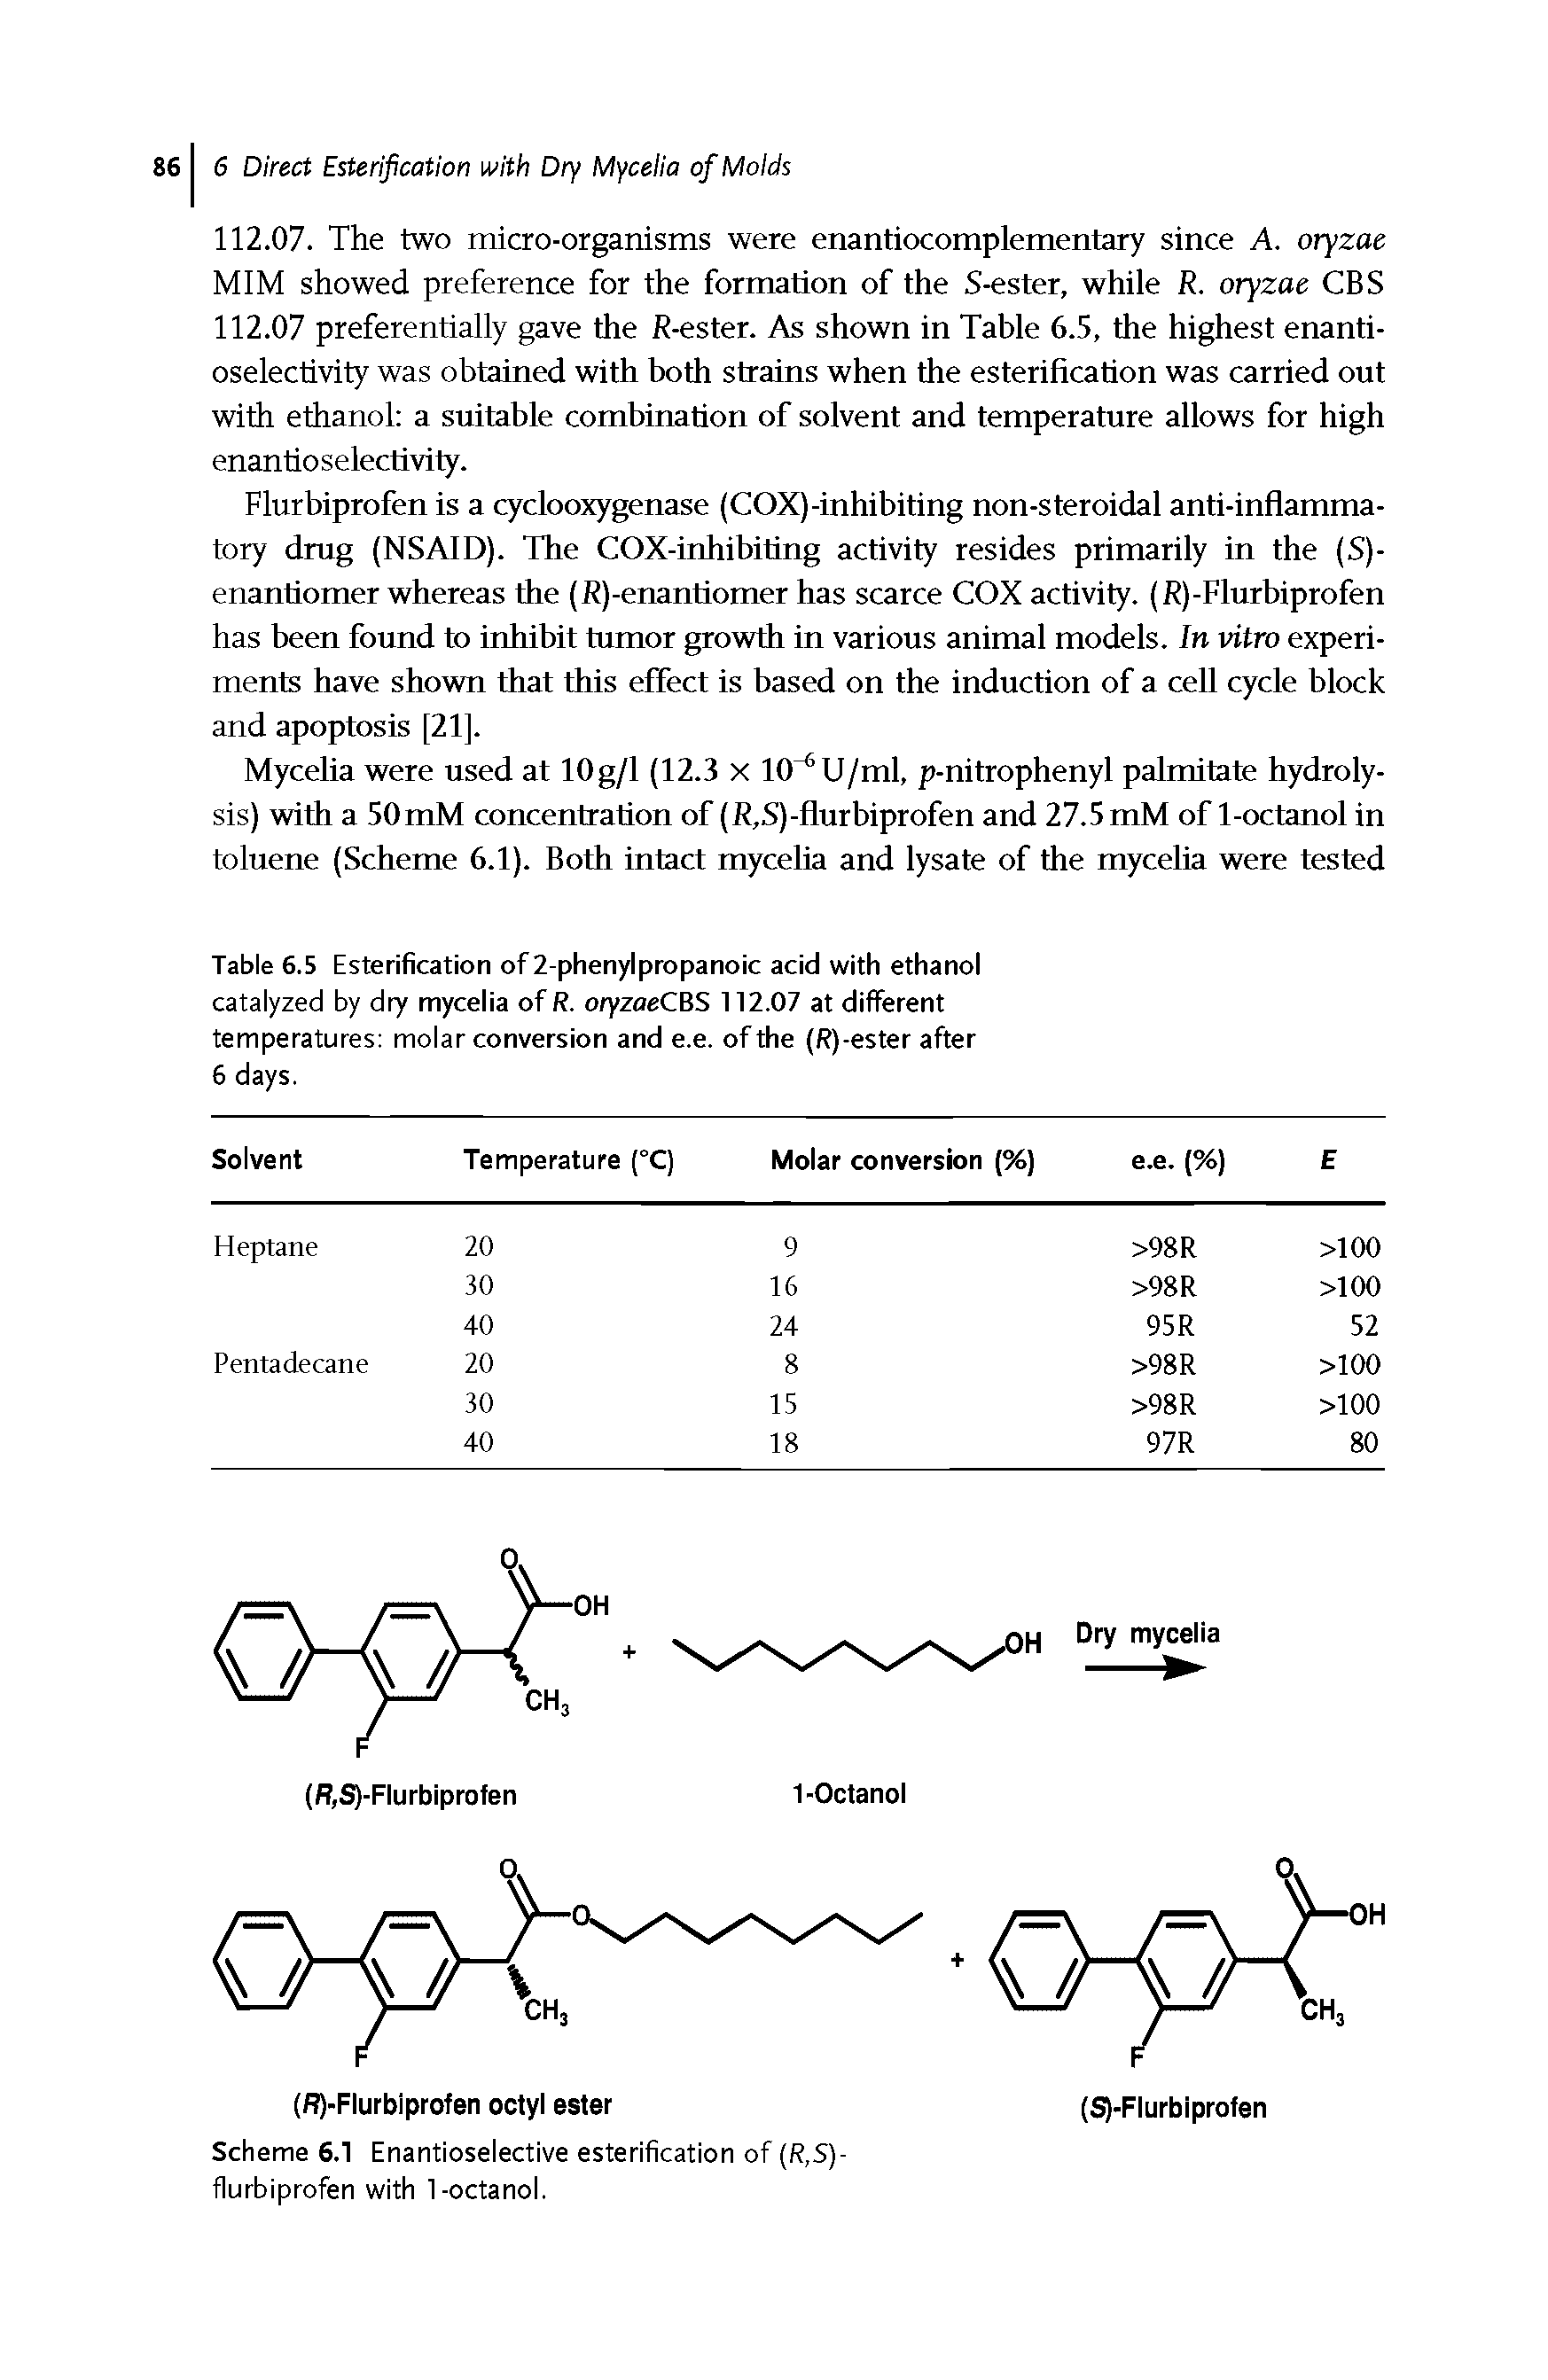 Scheme 6.1 Enantioselective esterification of (R,S)-fiurbiprofen with 1-octanoi.